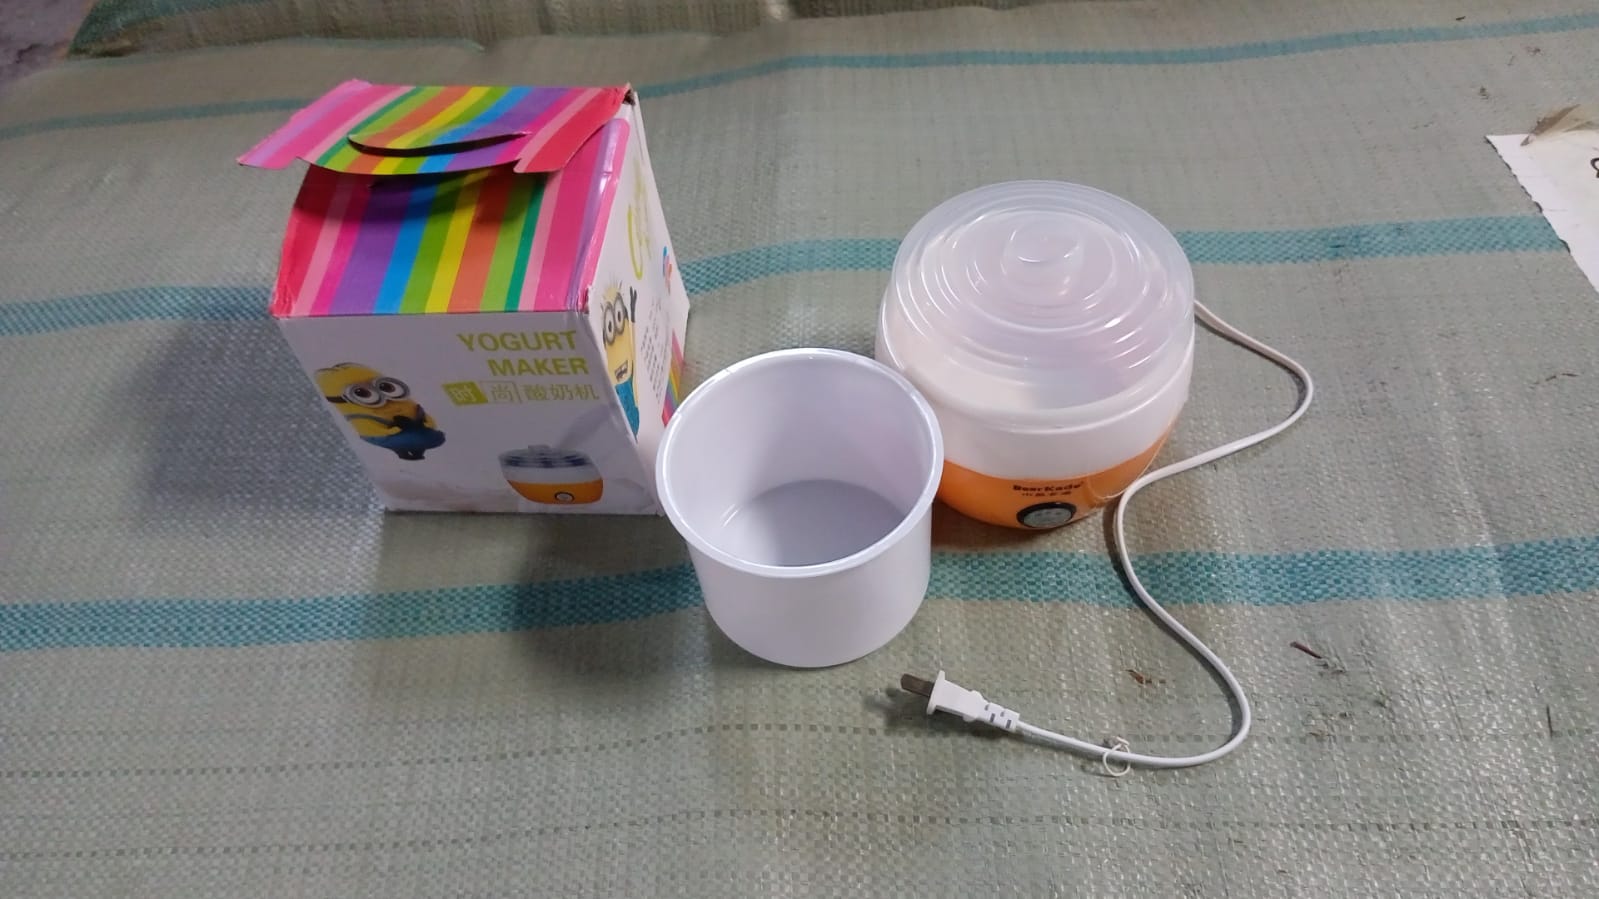 2533C Electronic Yogurt Maker, Automatic Yogurt Maker Machine 1L Yoghurt Plastic Container for Home Use